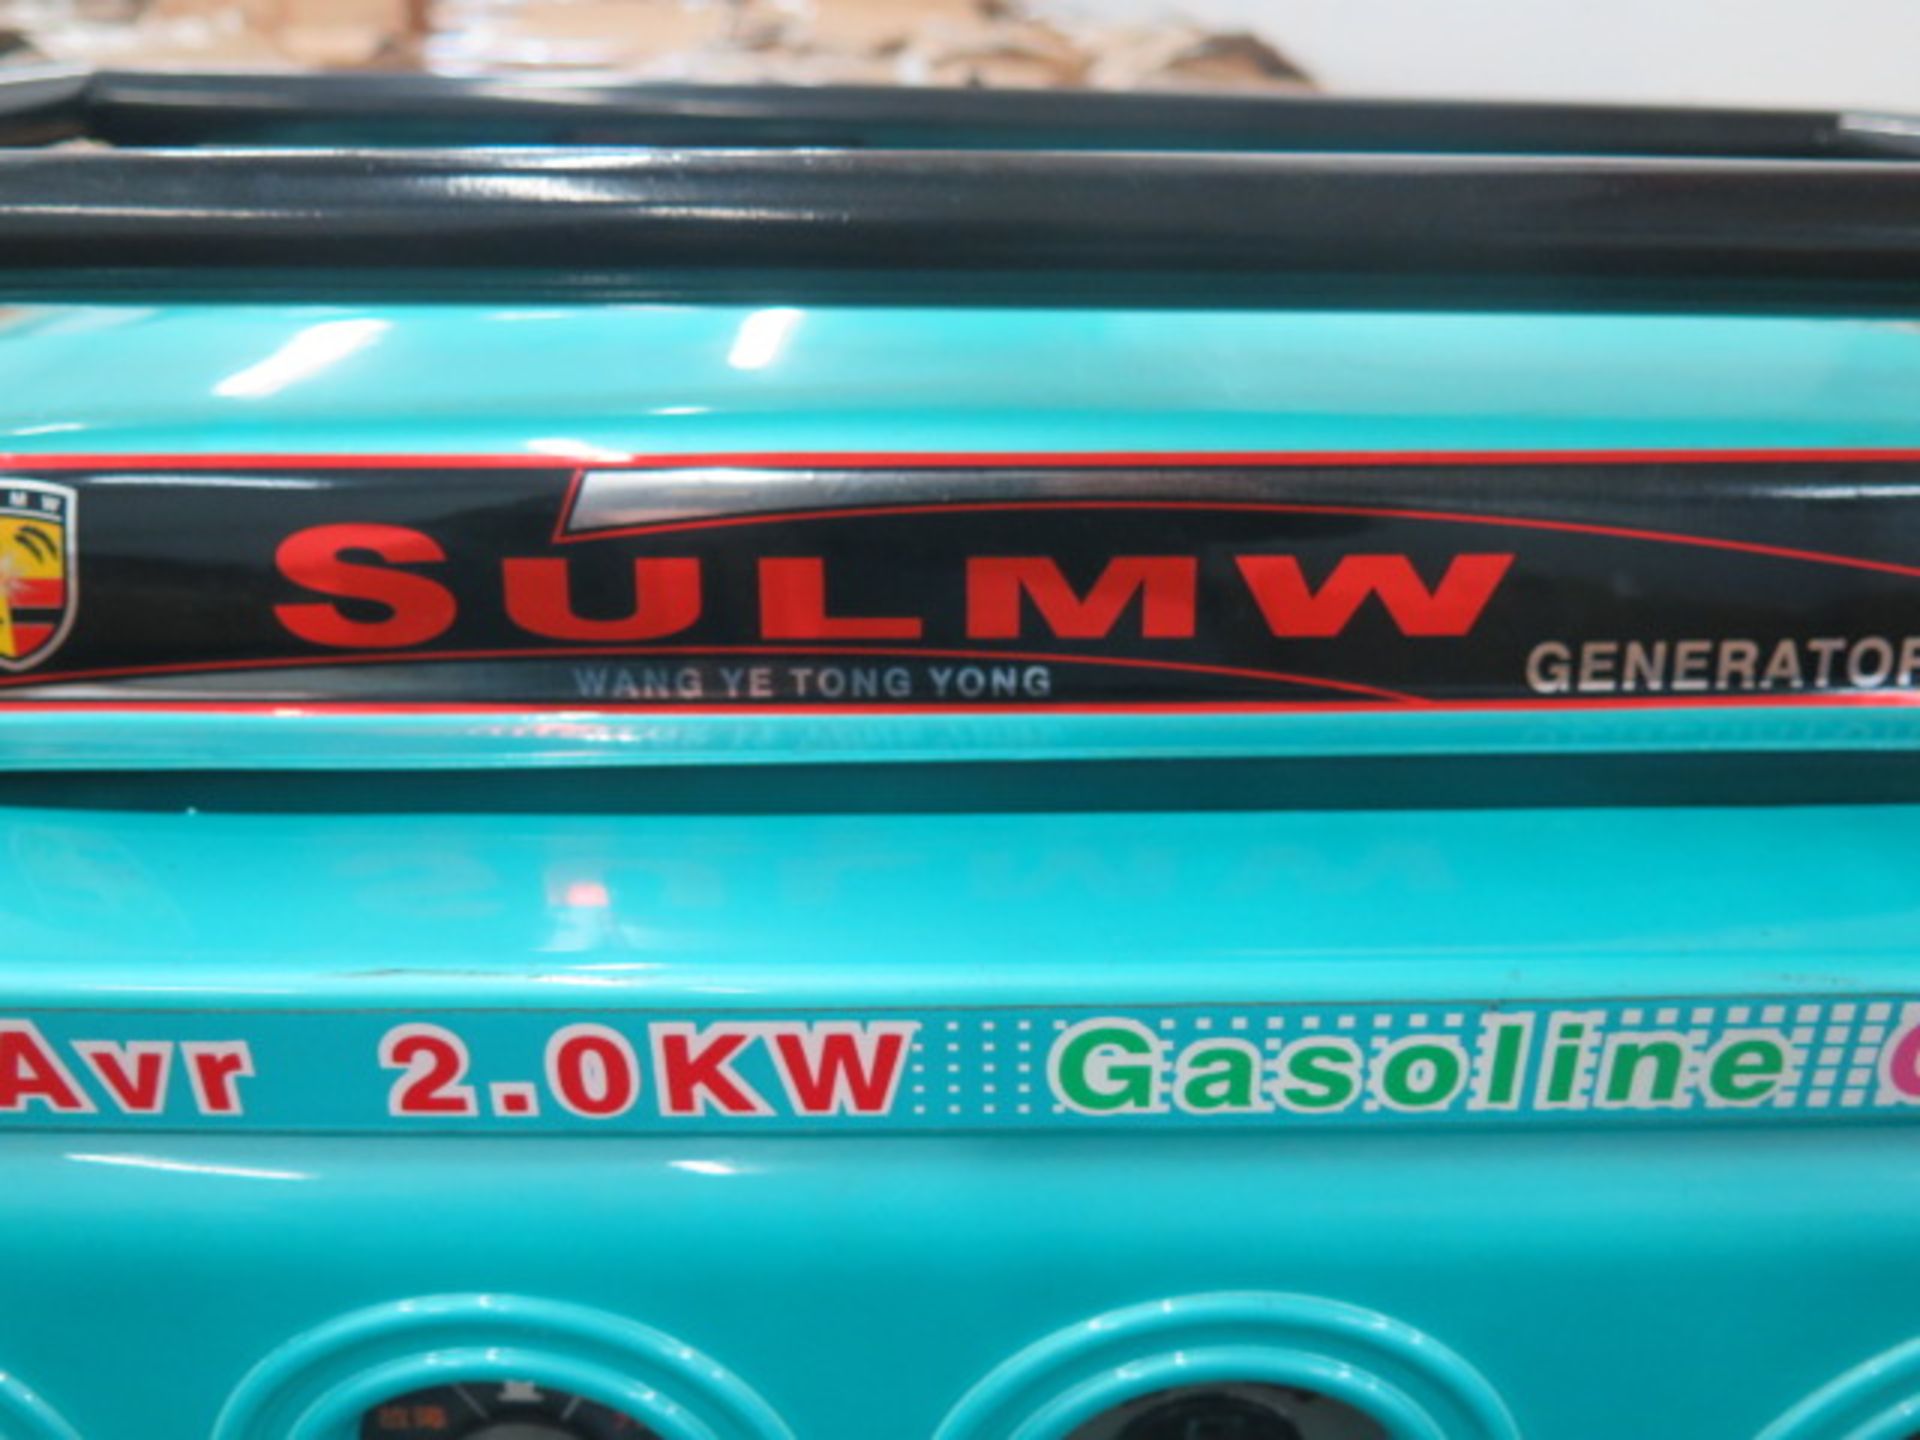 SULMW Modern AVR 2000 Watt Gas Powered Generator - Image 2 of 4